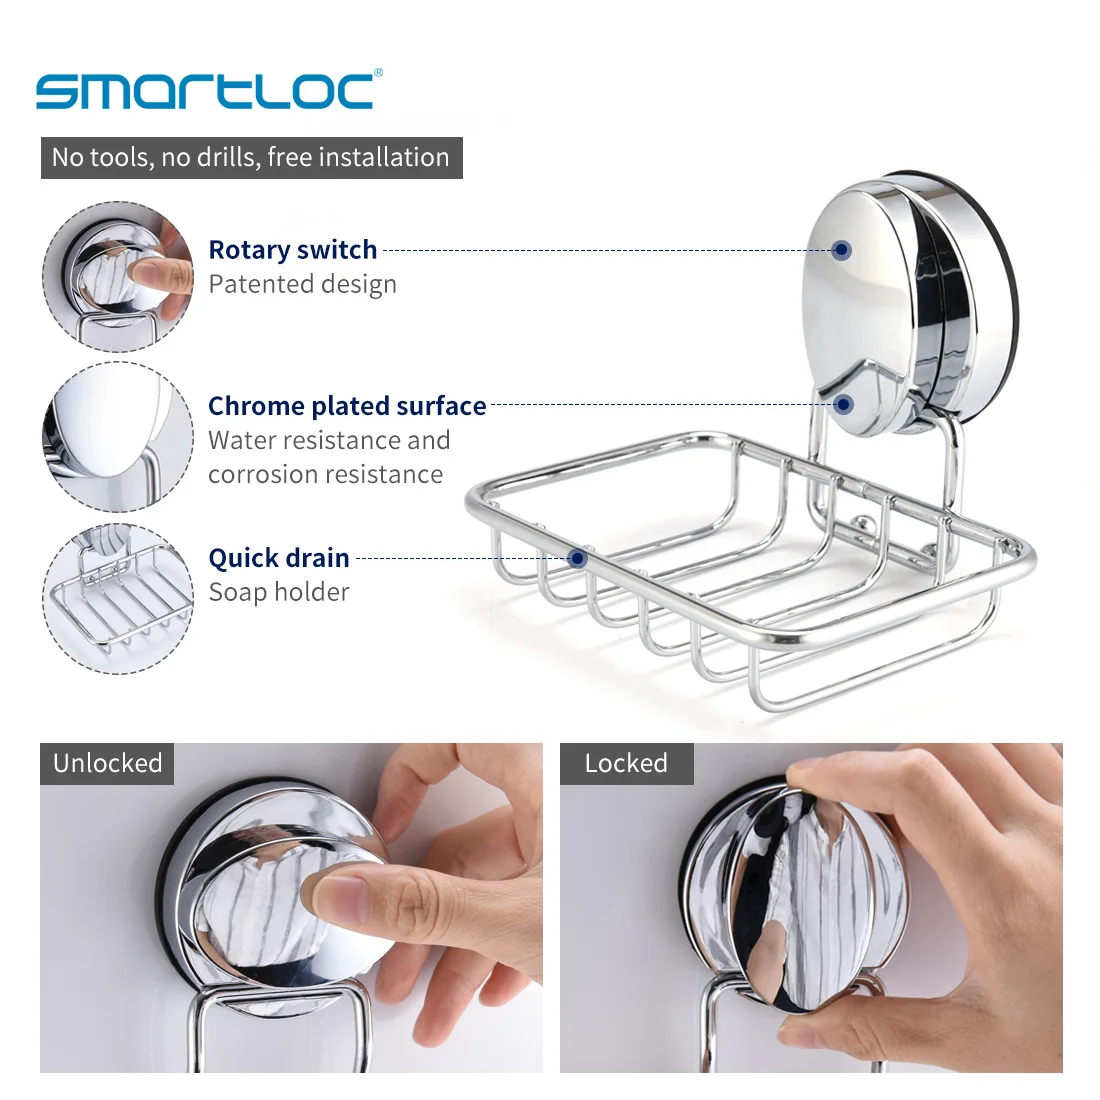 smartloc Vacuum Suction Iron Wall Mounted Soap Dish Drain Dispenser Bathroom Accessories Organizer Bath Shower Storage Container